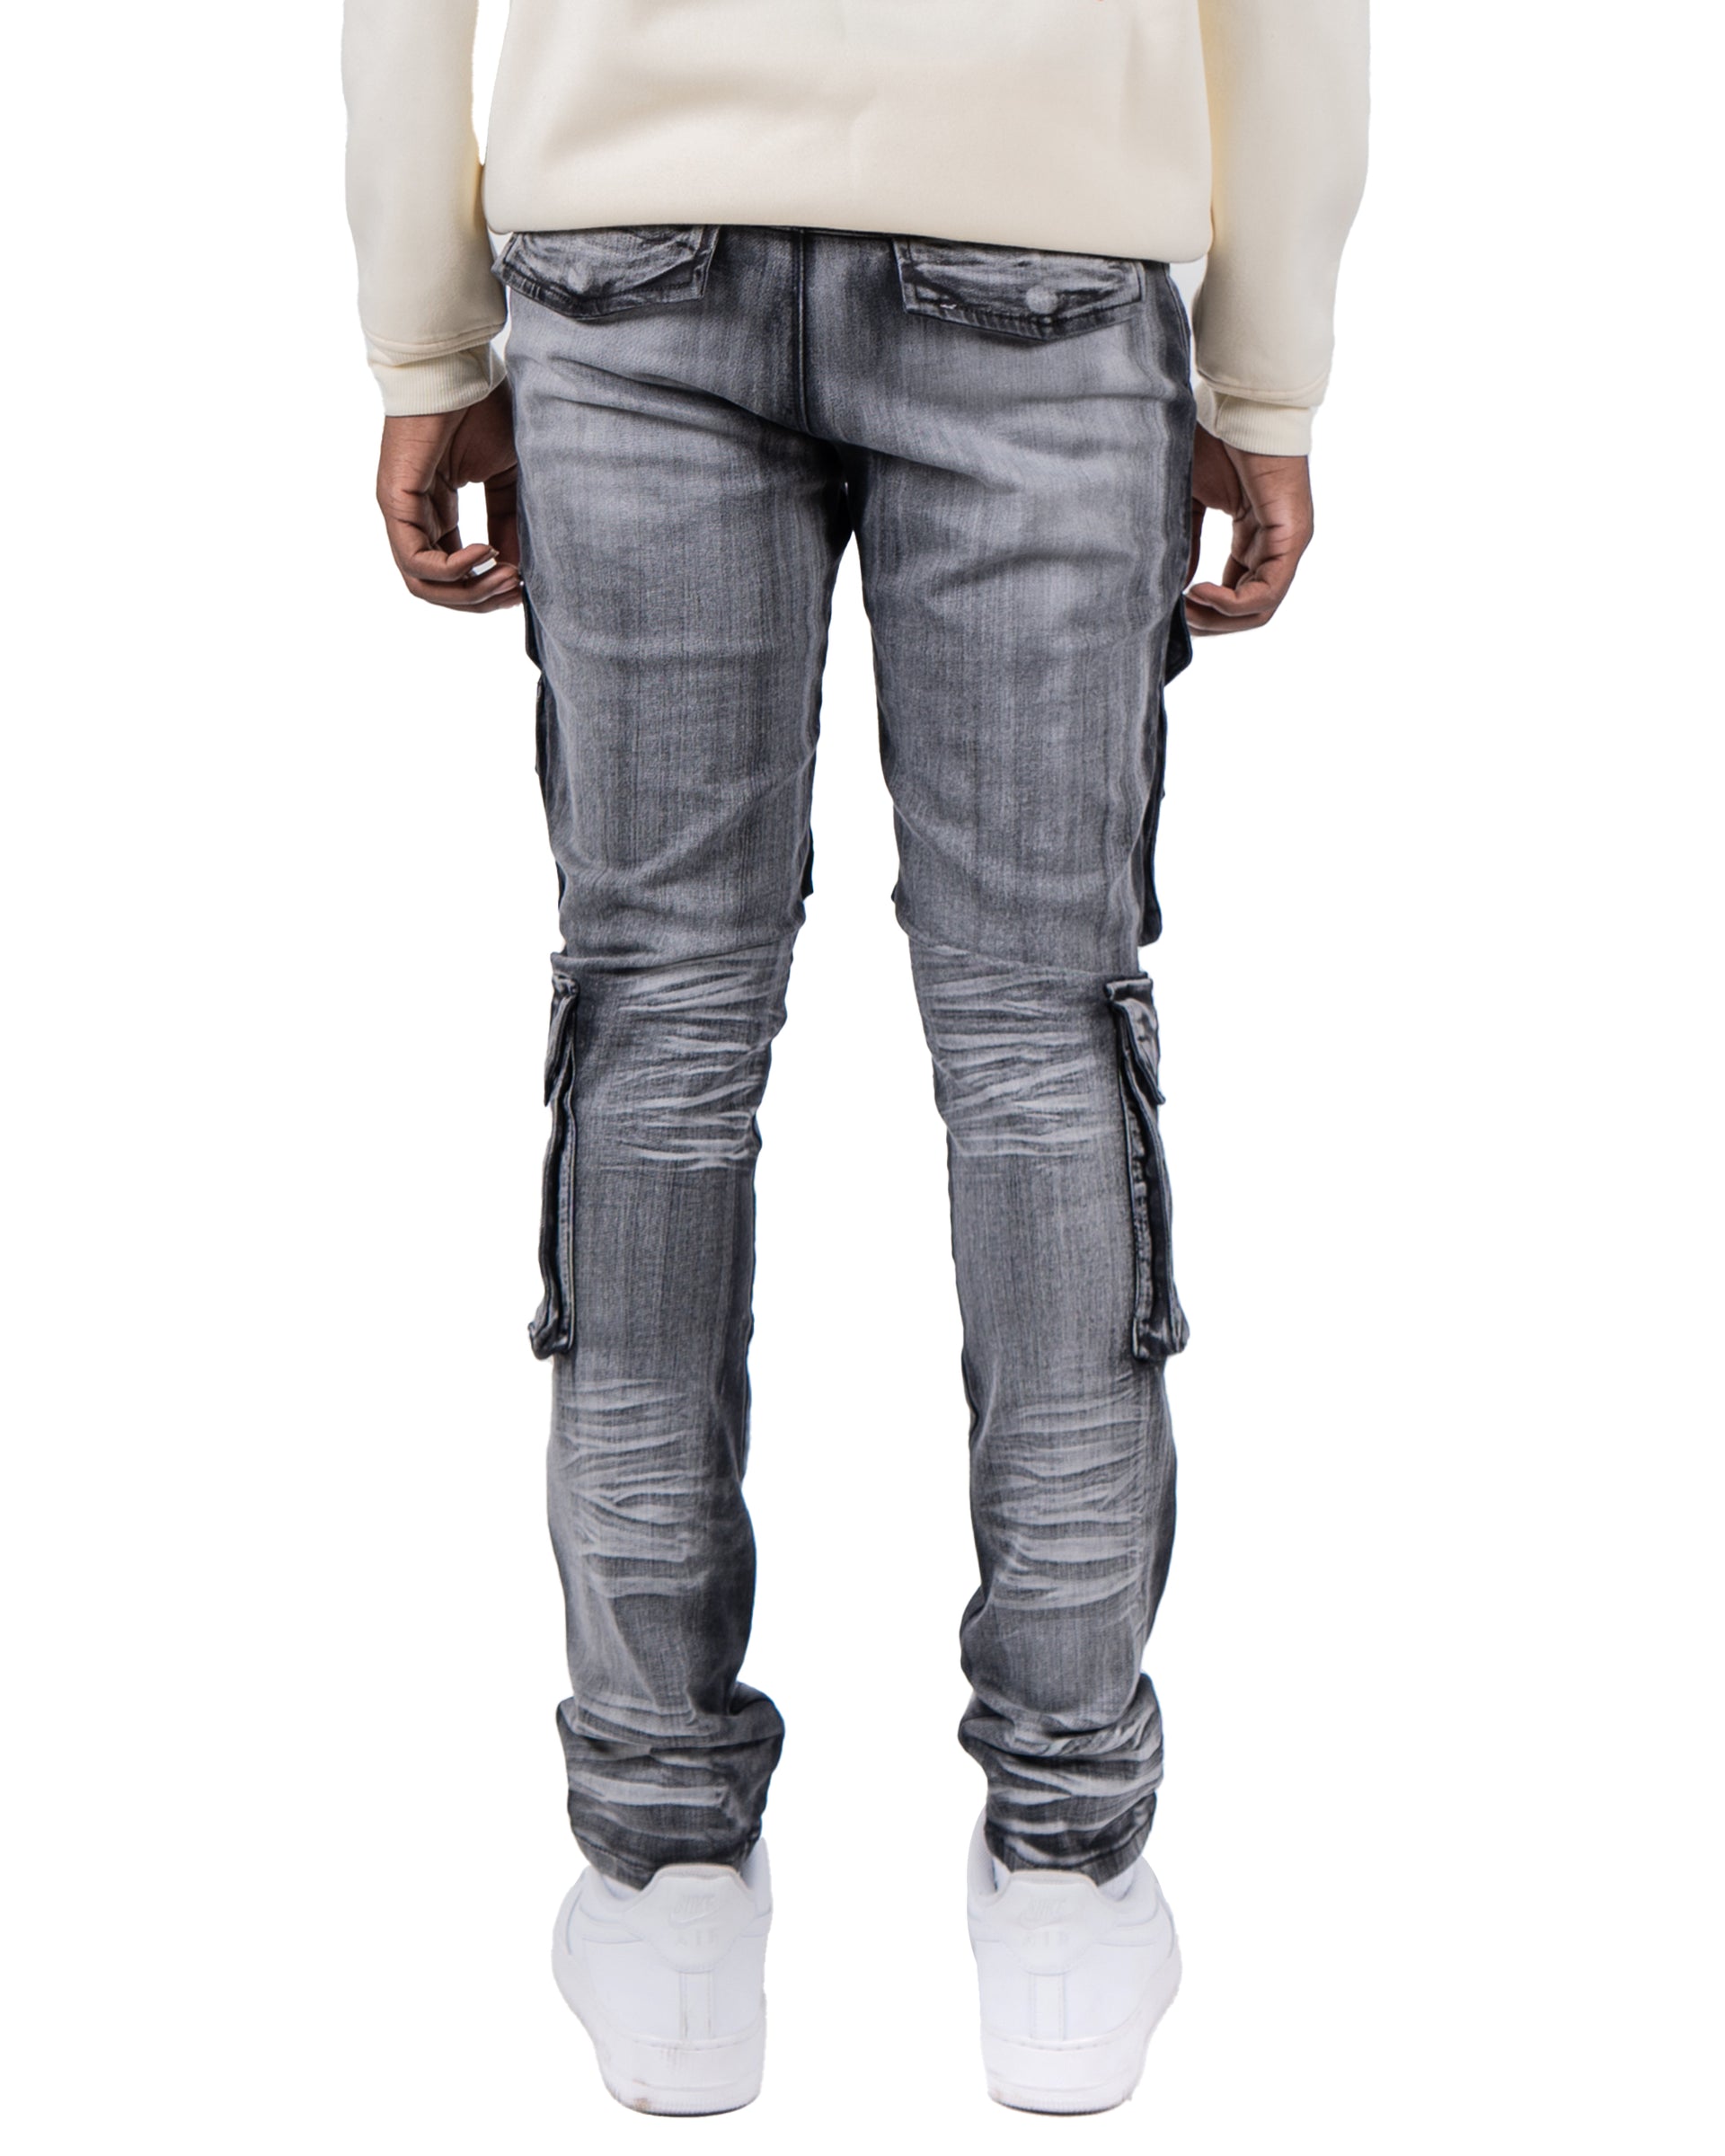 AUSTIN | Utility Pocket Fashion Skinny Denim Jeans in Black Wash